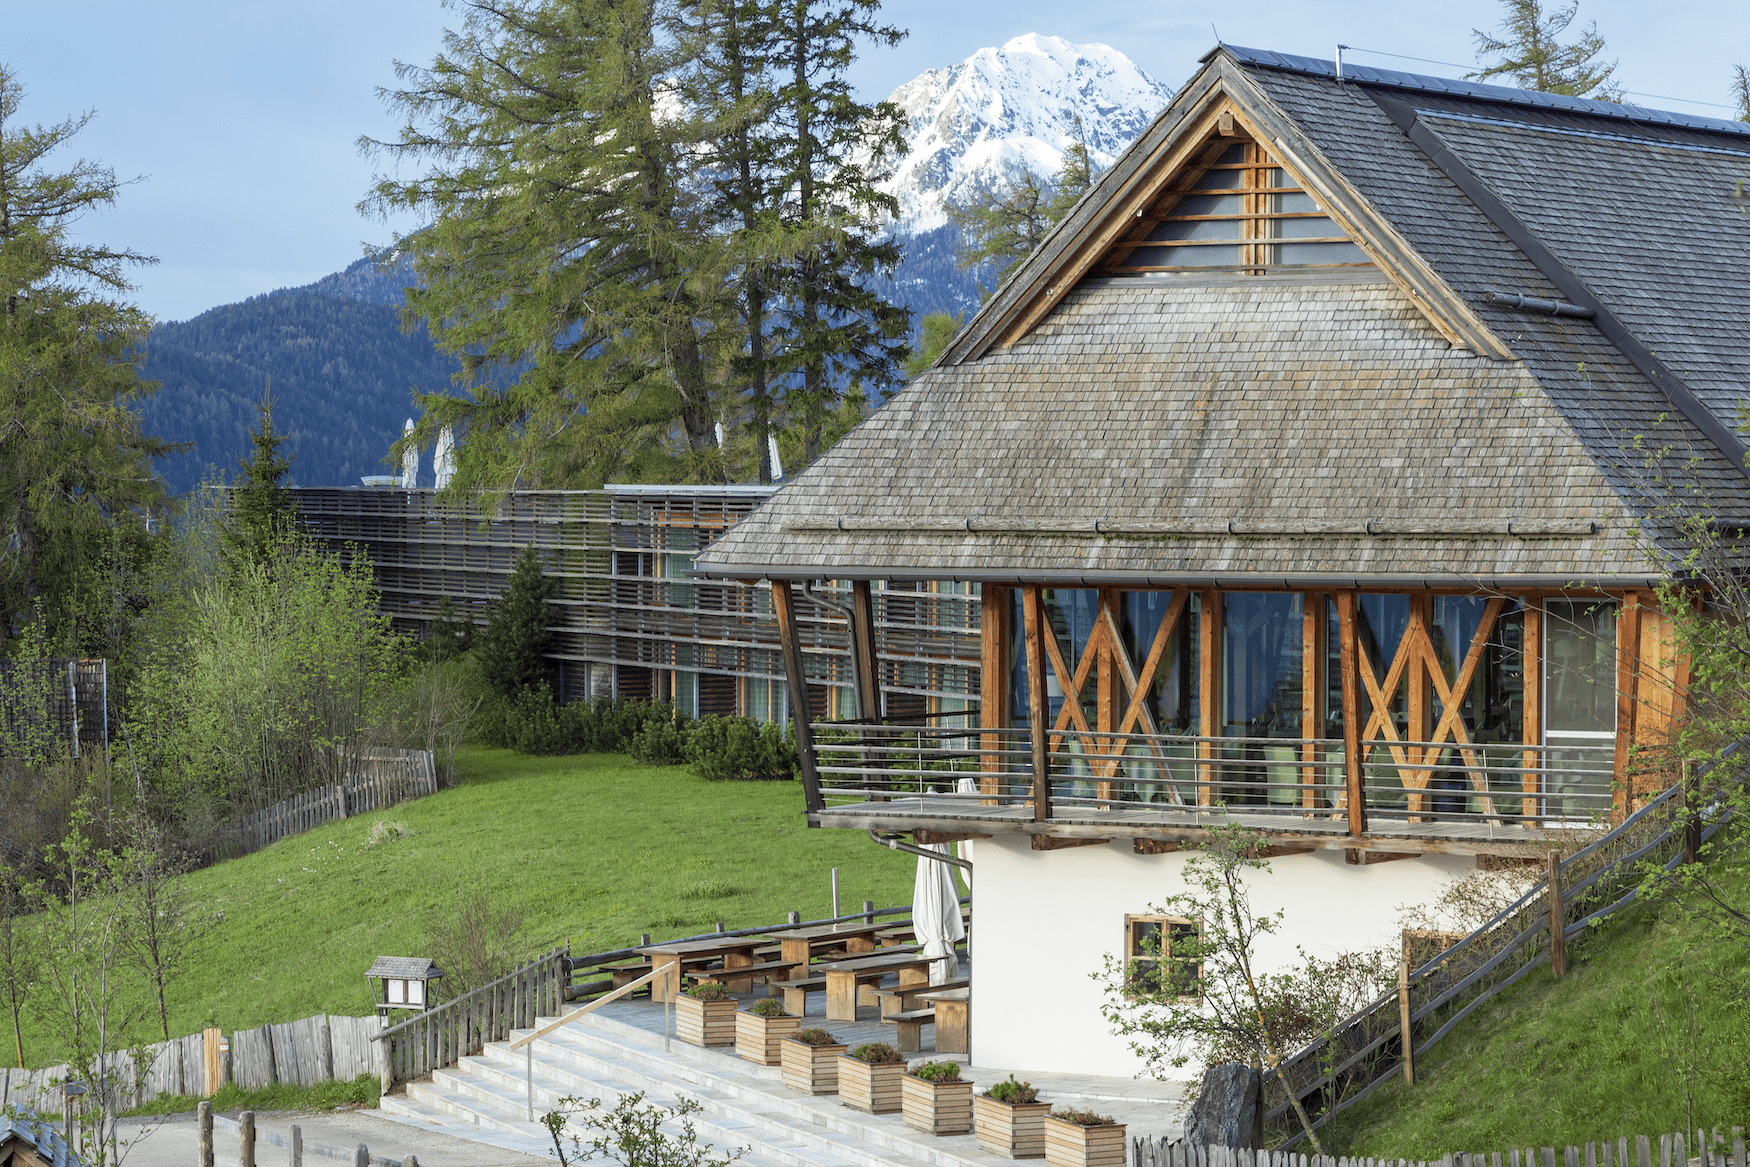 Hotels in der Natur: Das Vigilius Mountain Resort